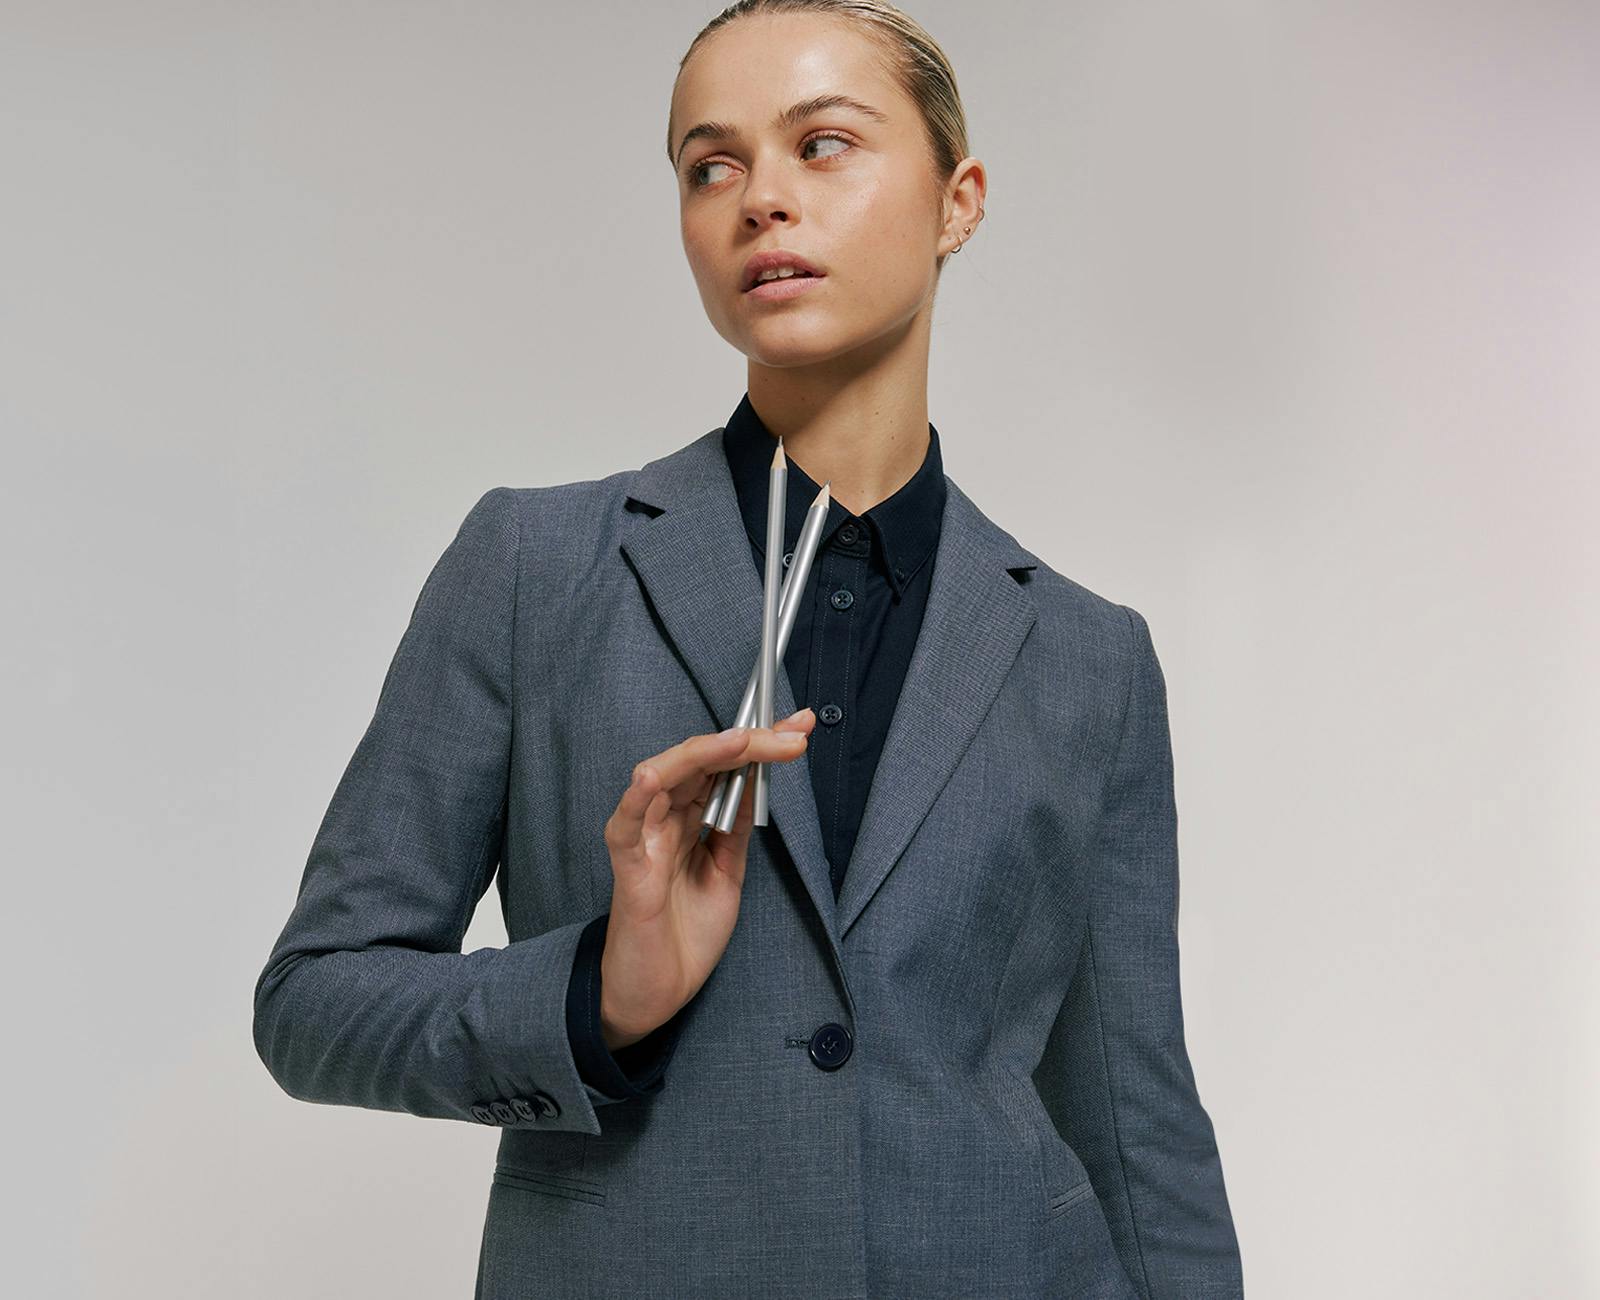 Saville Men's Blazer - Bluegrain Grey Suit Jacket